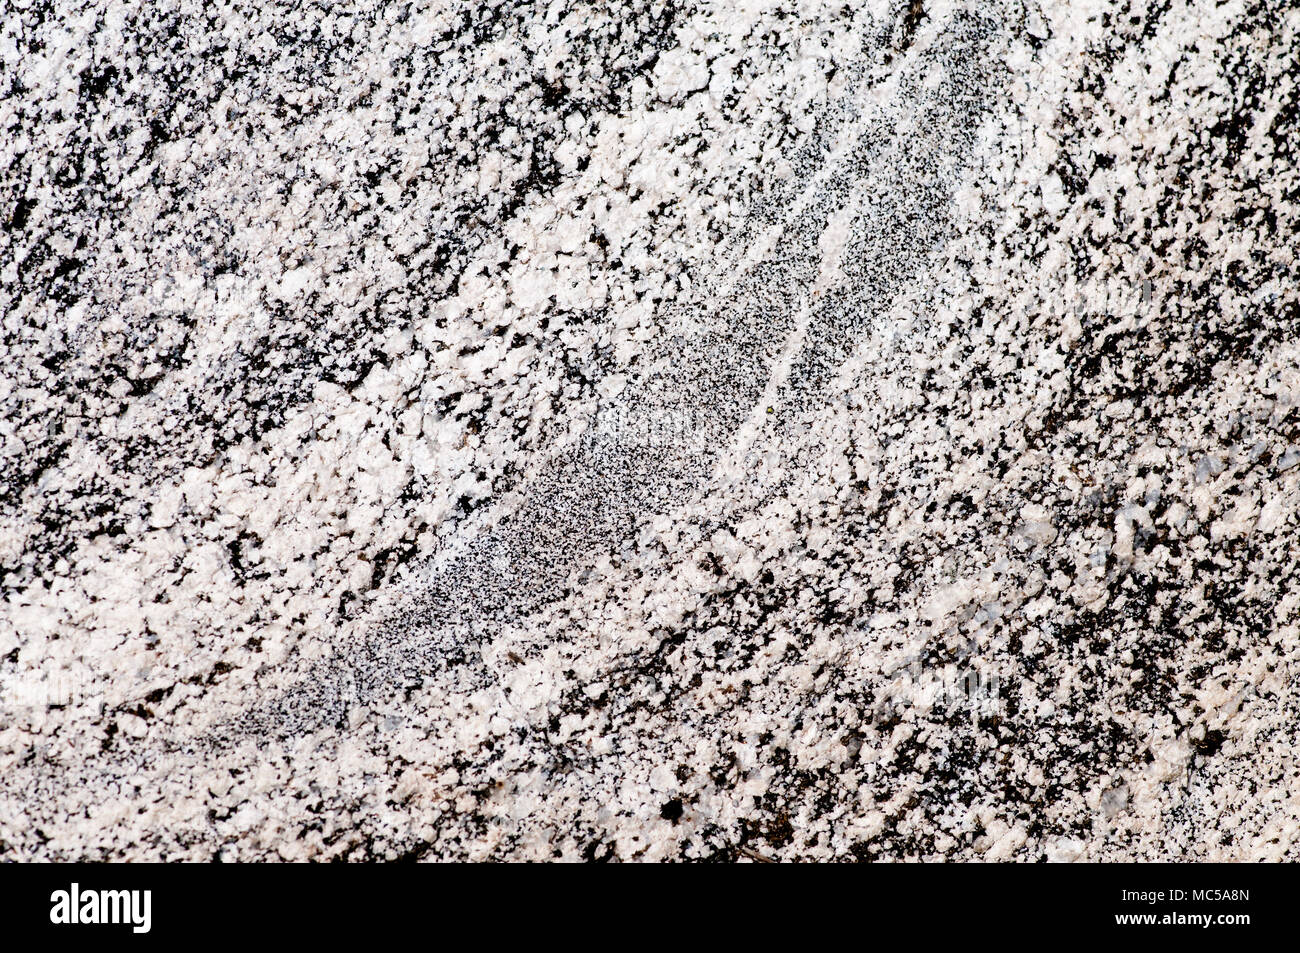 Granite from the Atlanta Lobe of the Idaho Batholith in southcentral Idaho.  The light minerals are plagioclase feldspar and quartz, while the dark mi Stock Photo